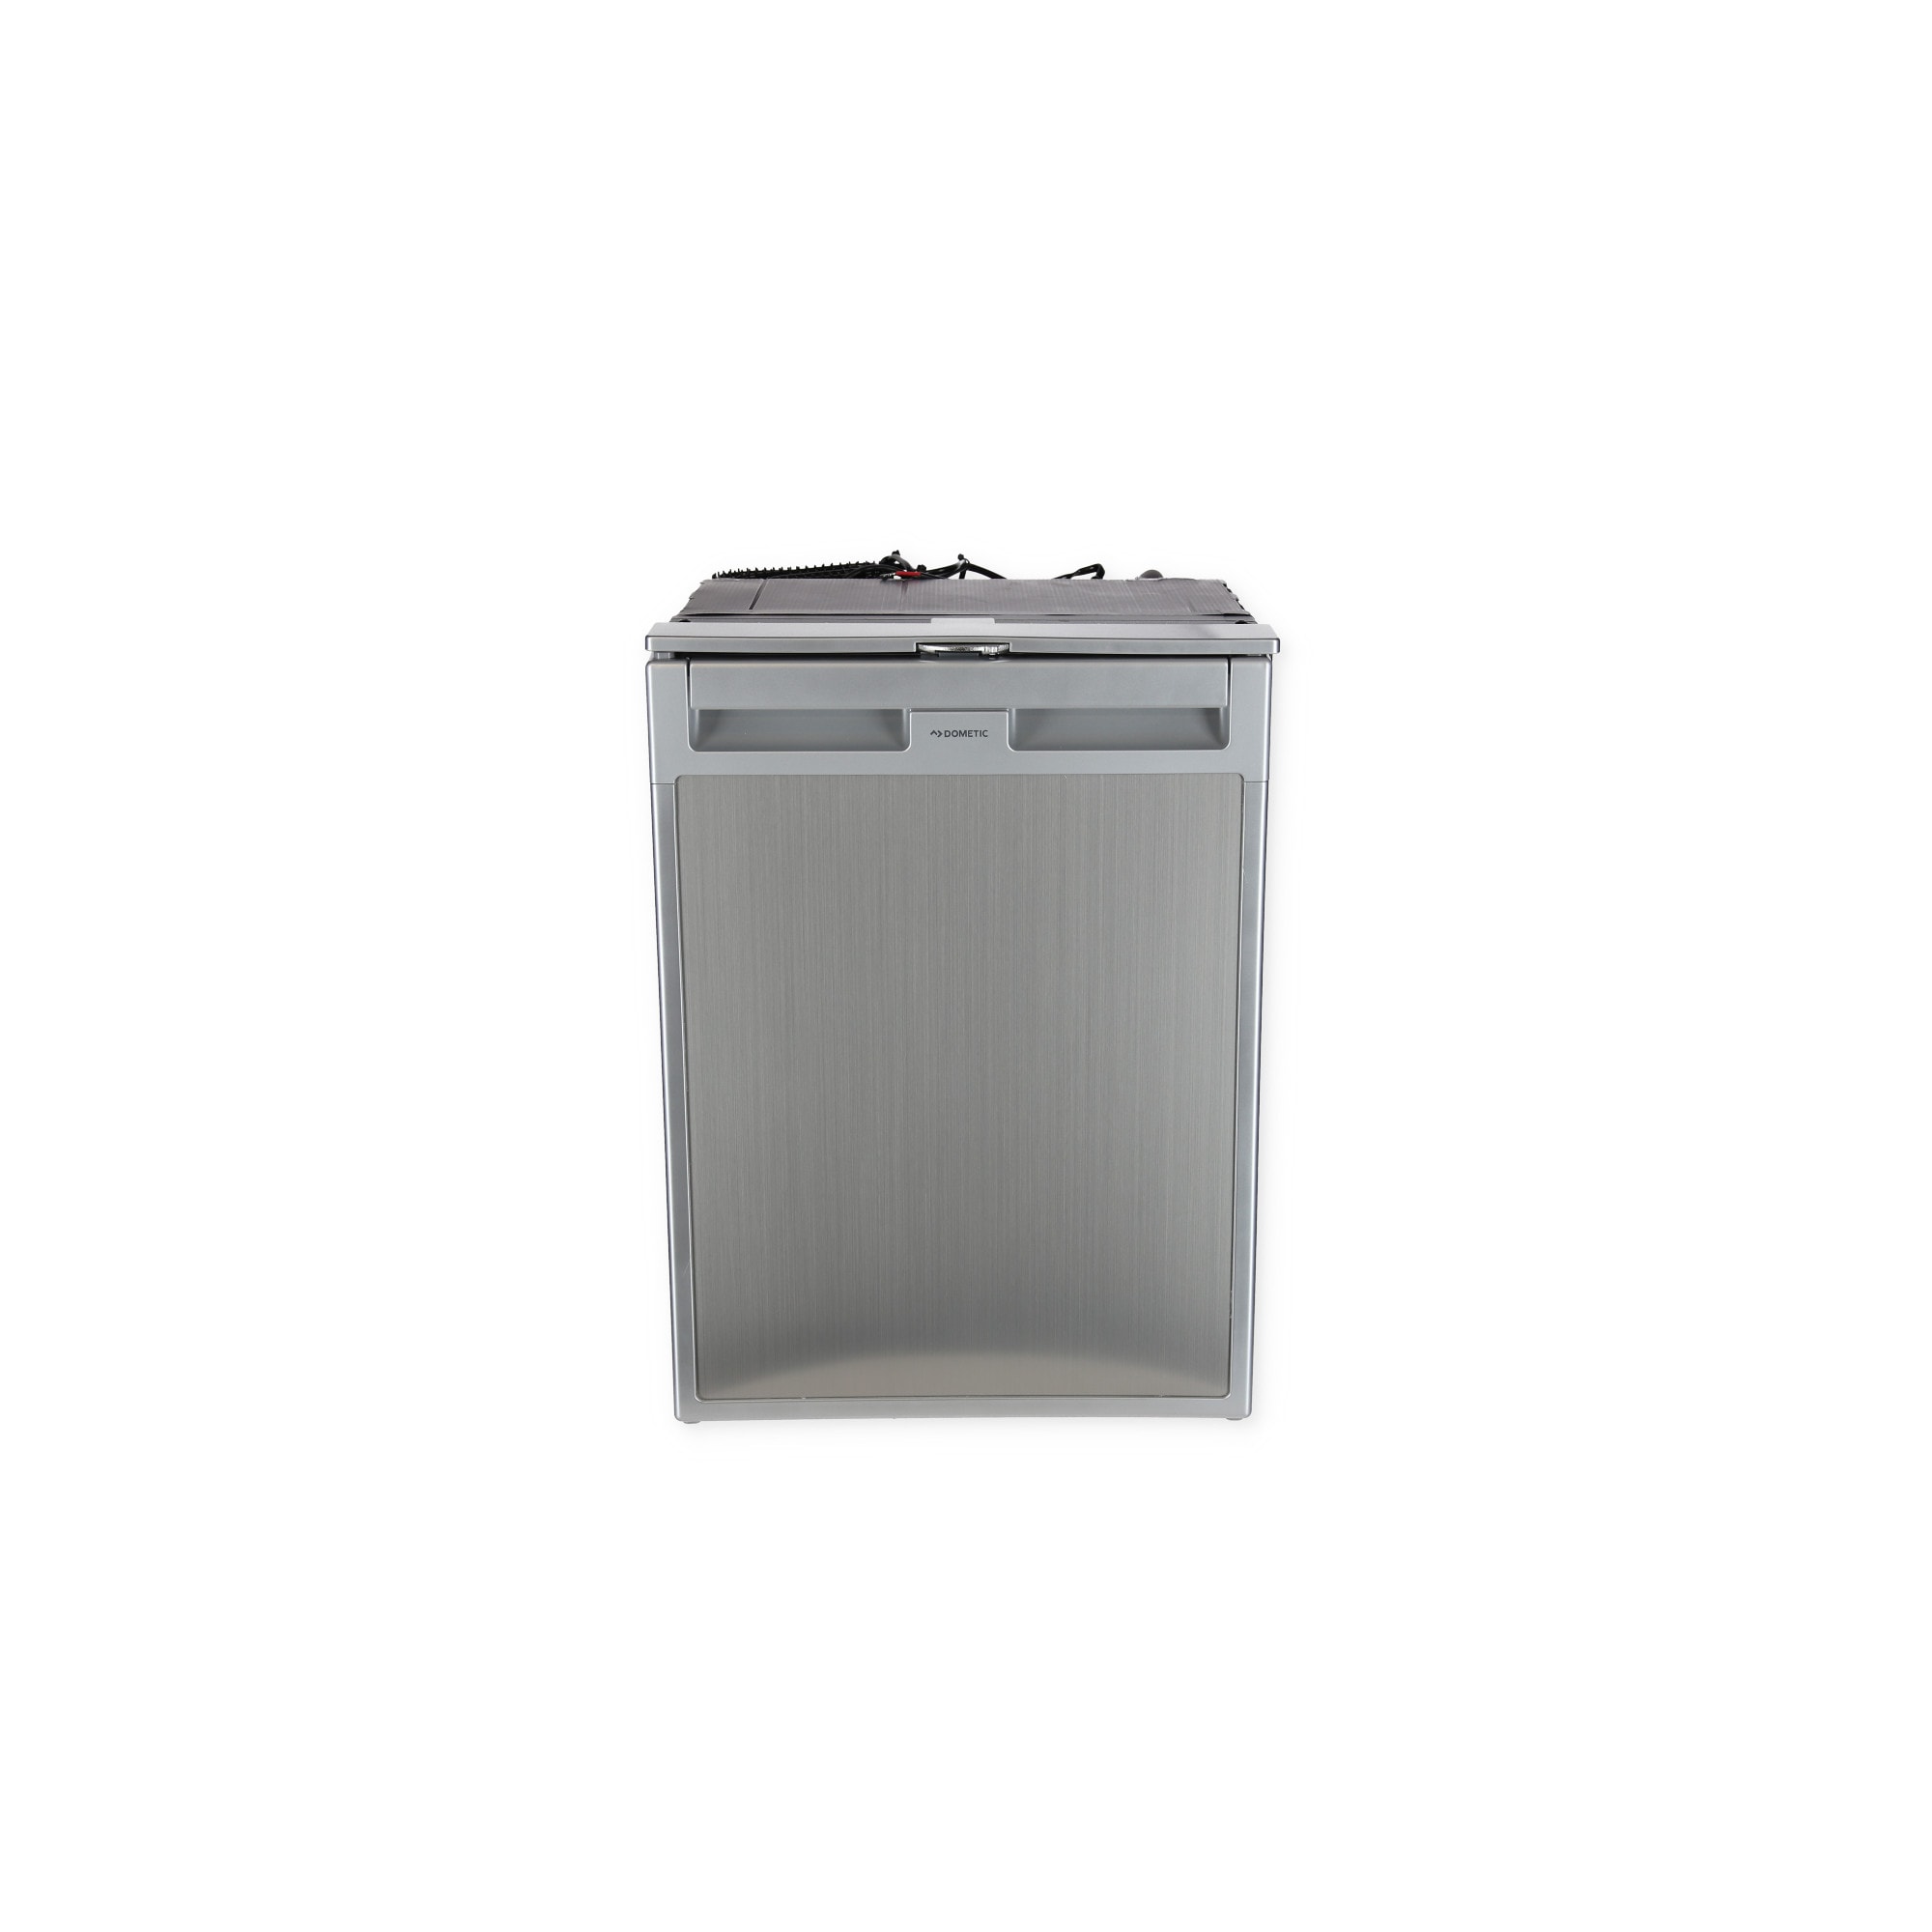 DOMETIC Coolmatic CRX 50 Kompressor-Kühlschrank, 45 l, in